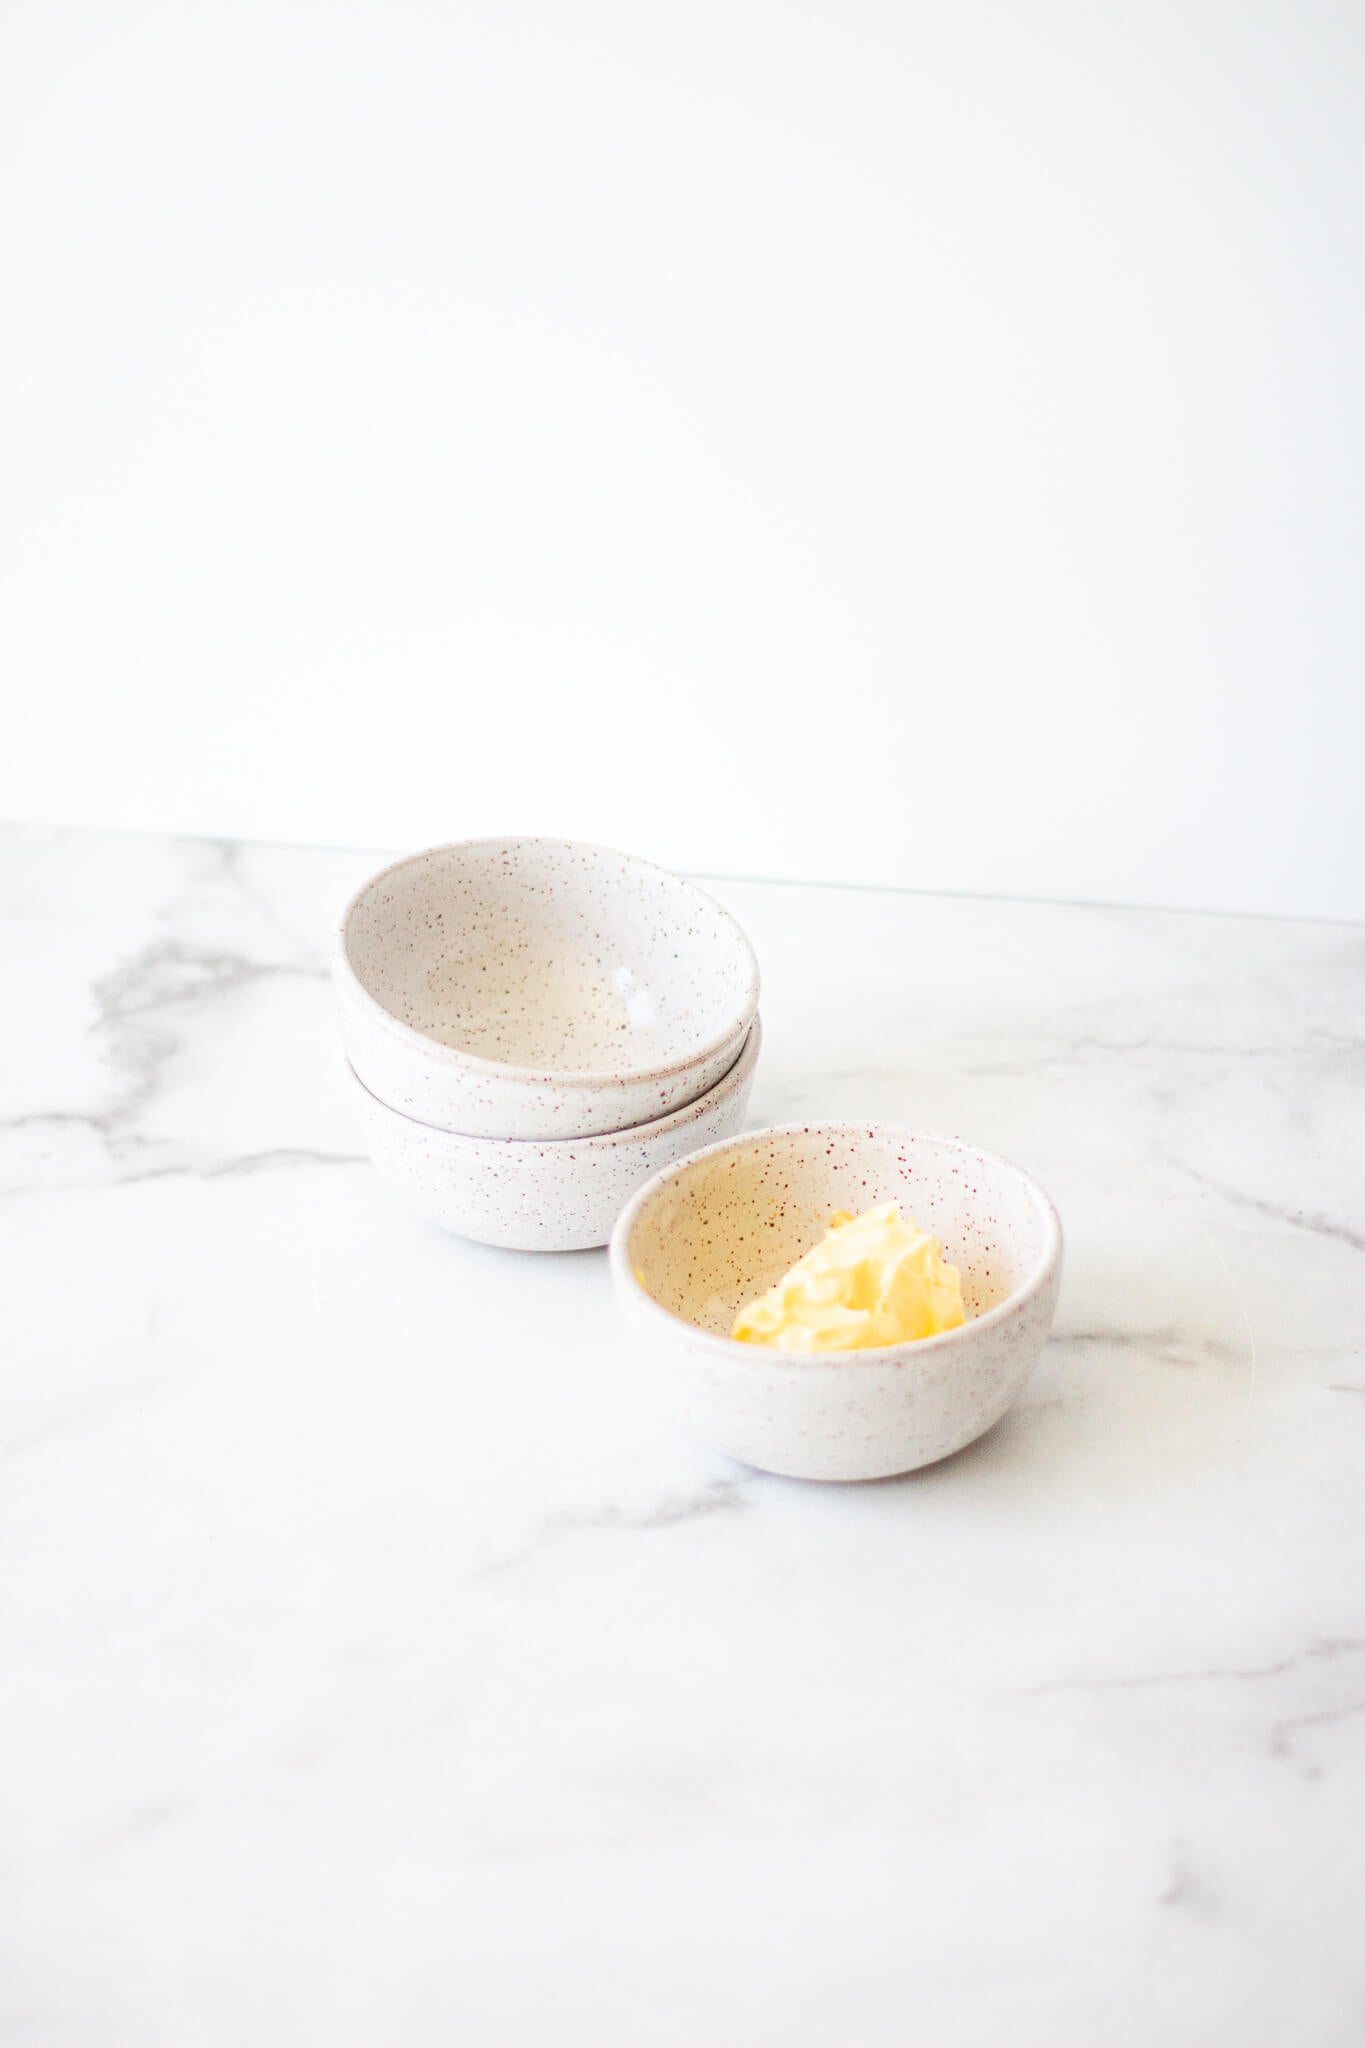 Ceramic Large Mixing Bowl — RachaelPots